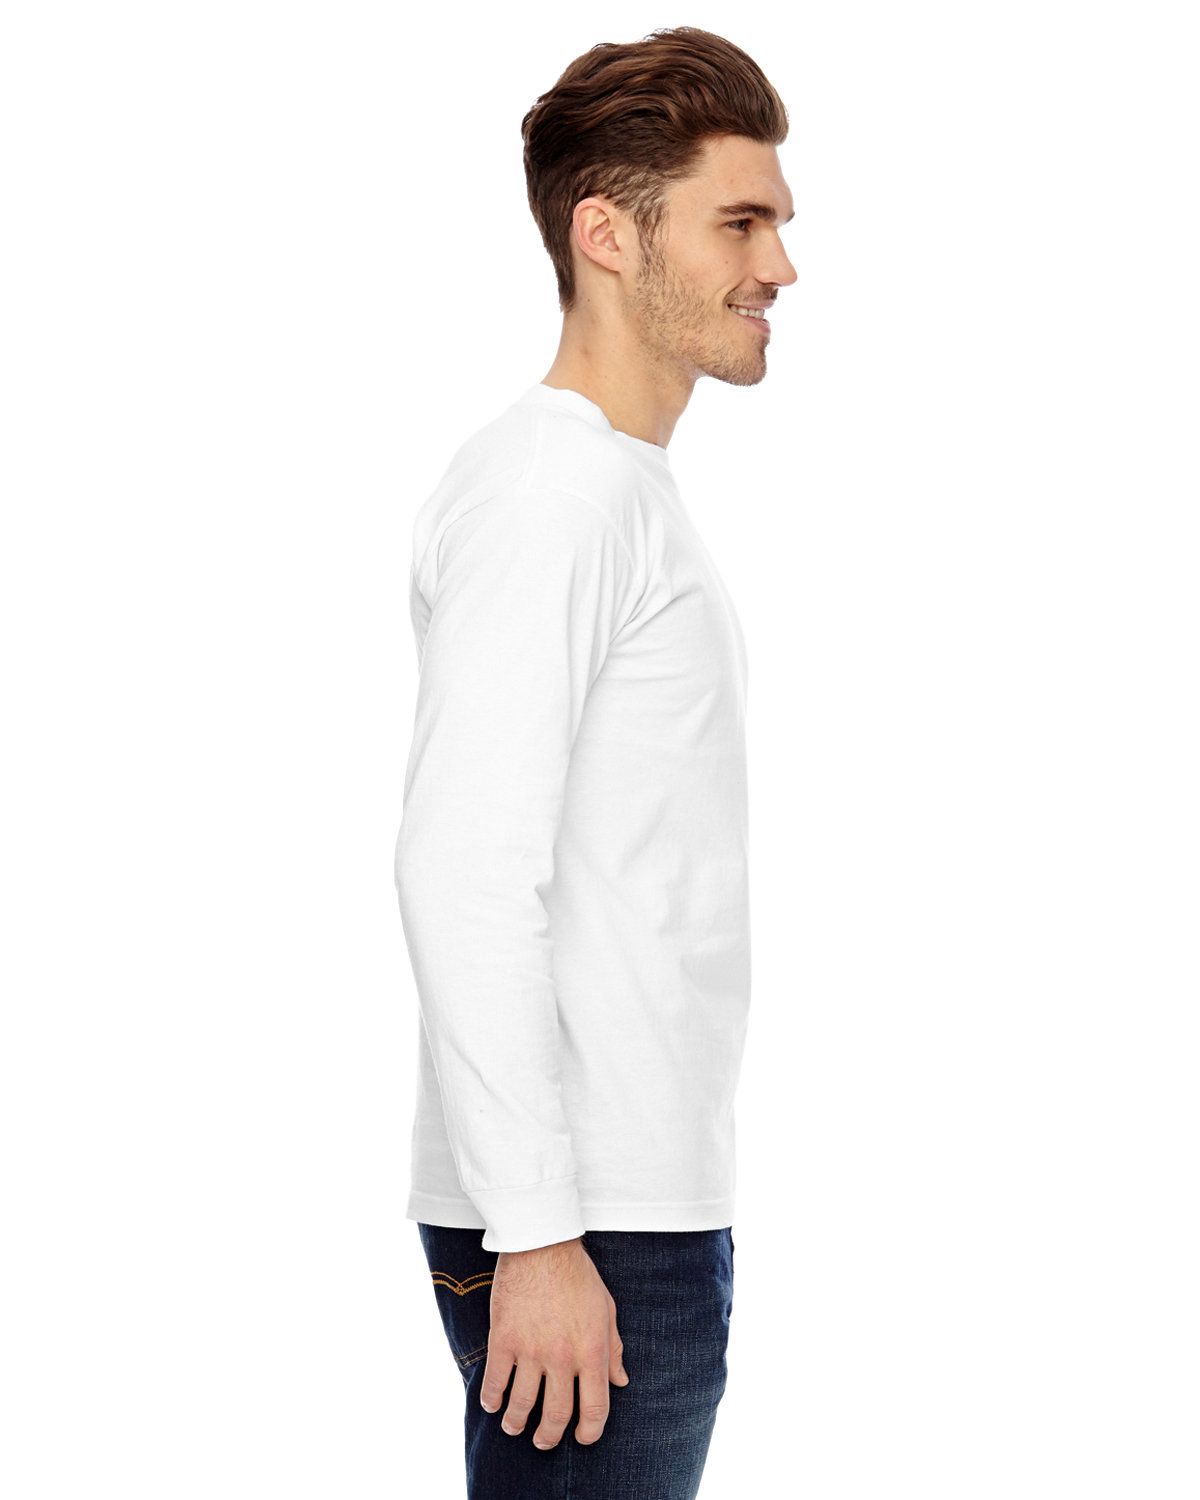 'Bayside BA6100 Adult Cotton Long Sleeve T-Shirt'